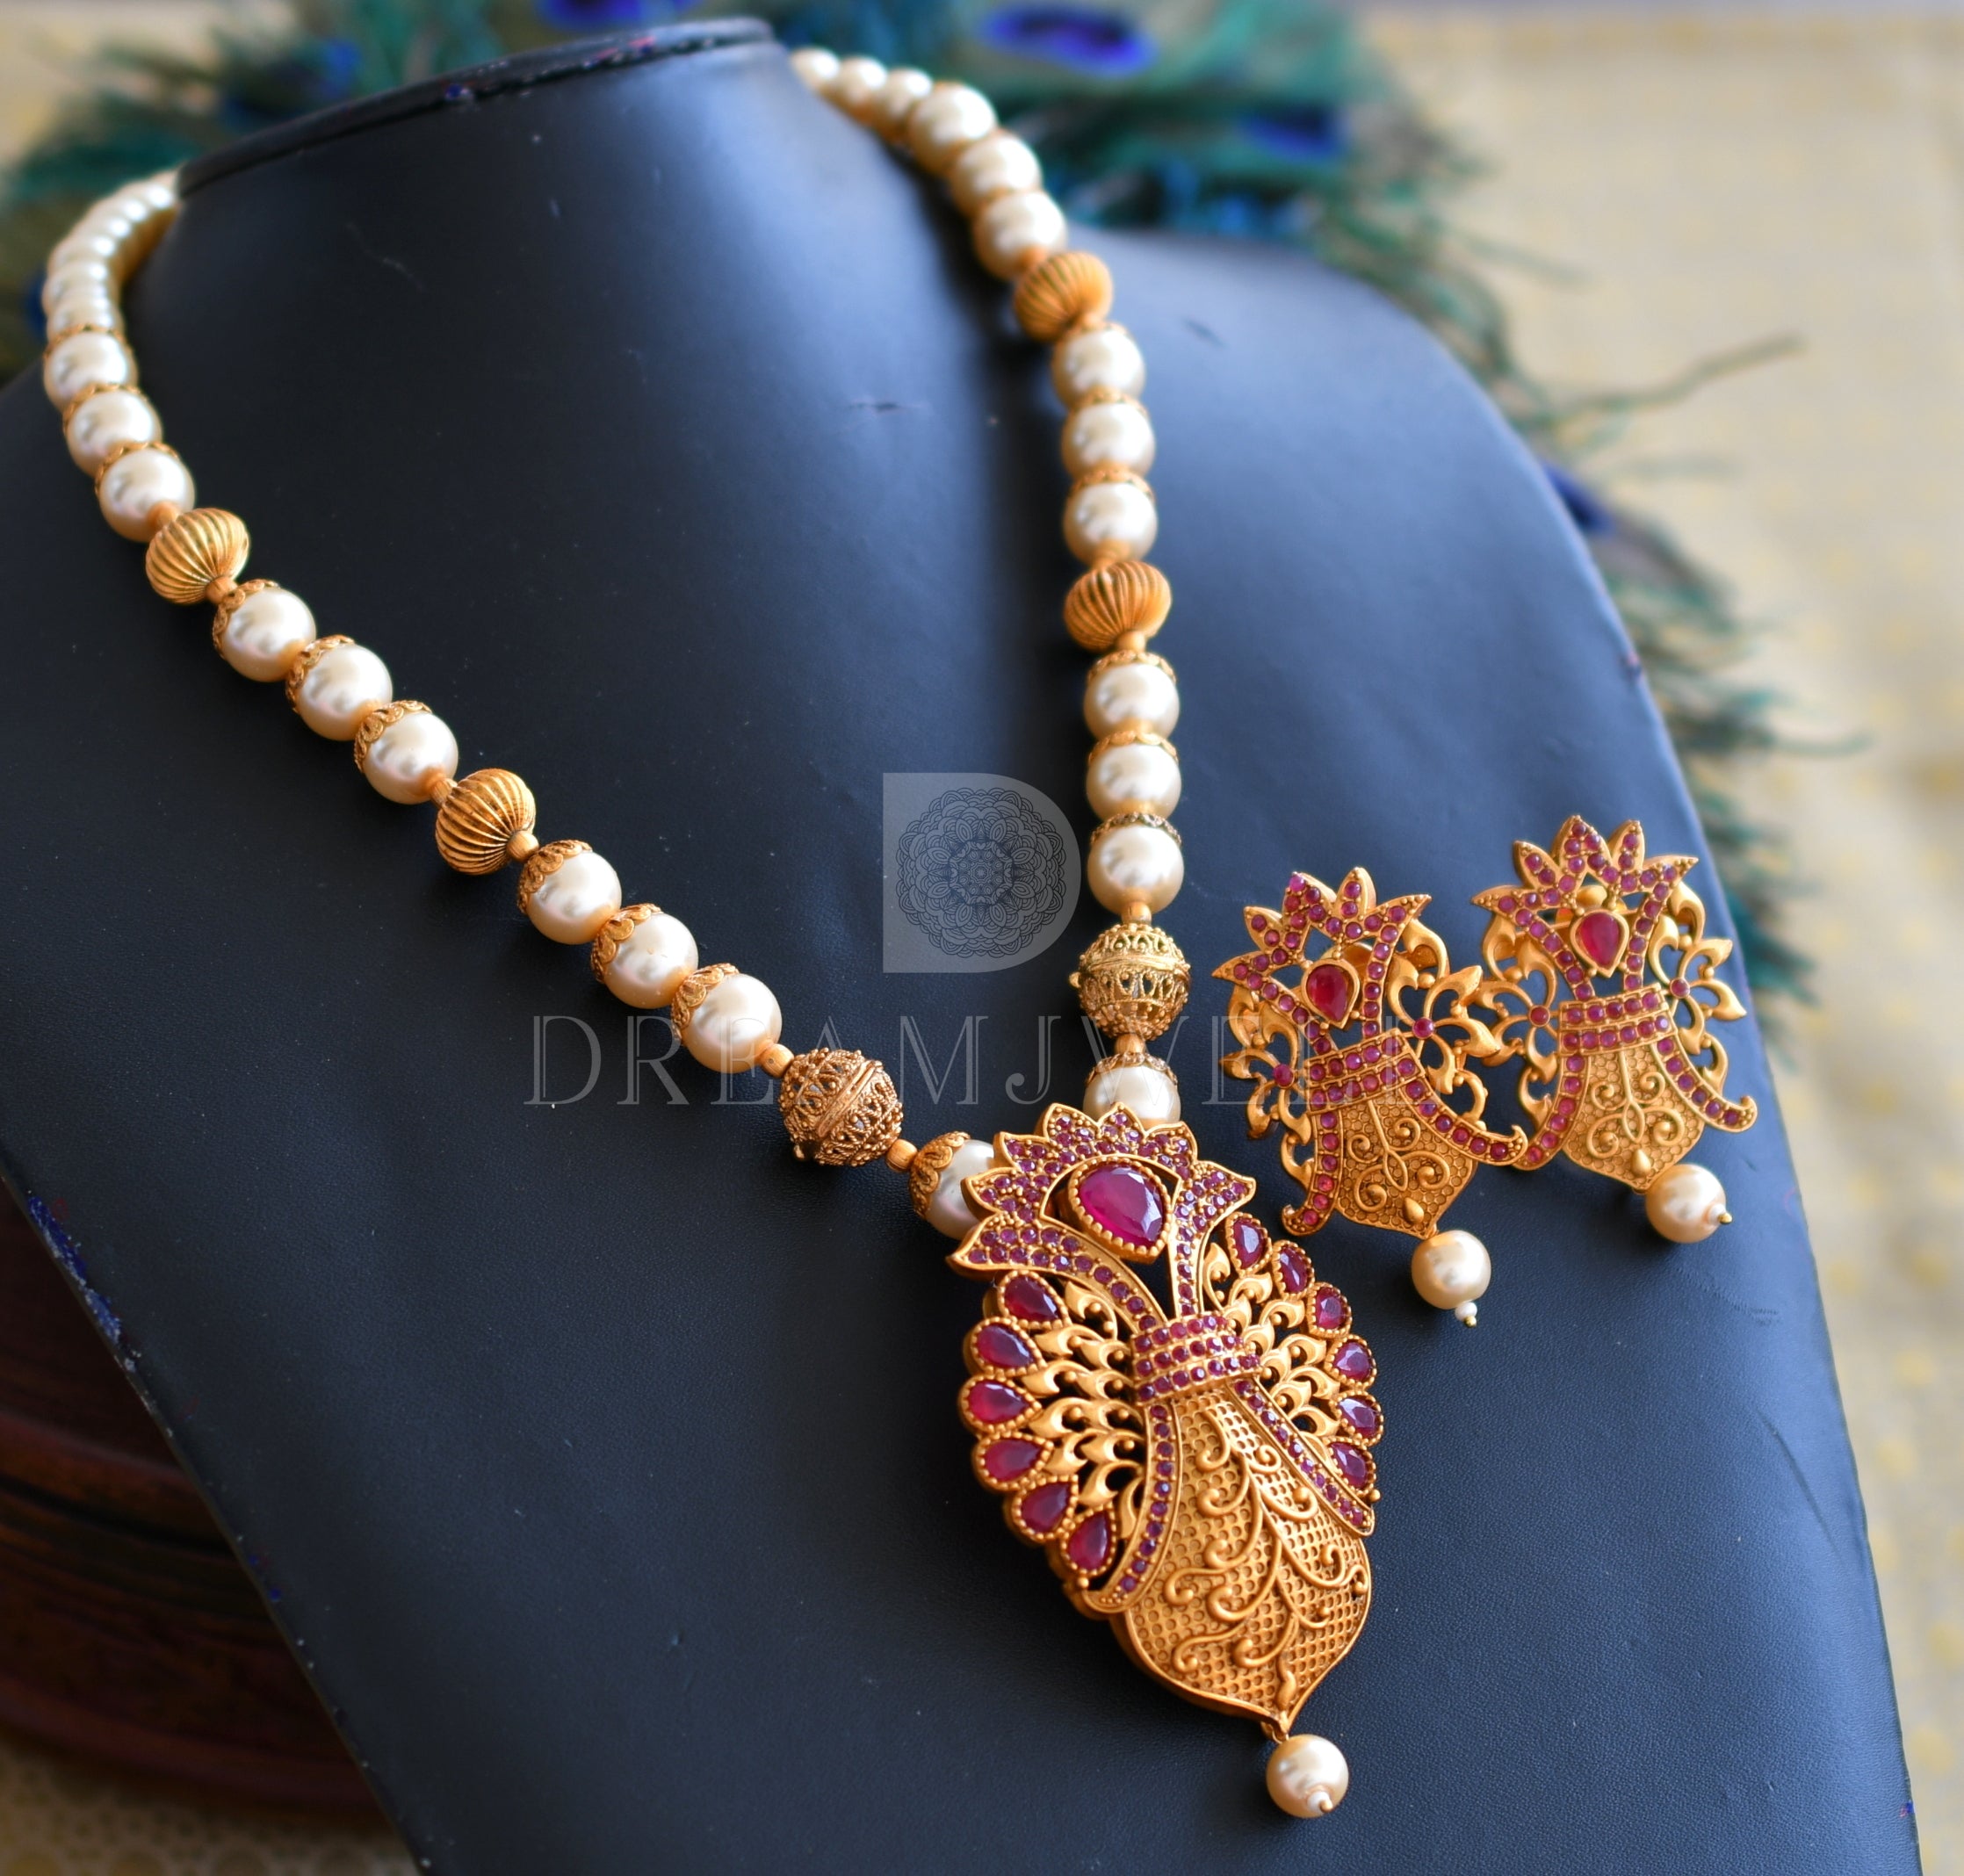 Extra Long Vintage Inspired Pearl Necklace - Mainestone Jewelry -  Farmington, Maine